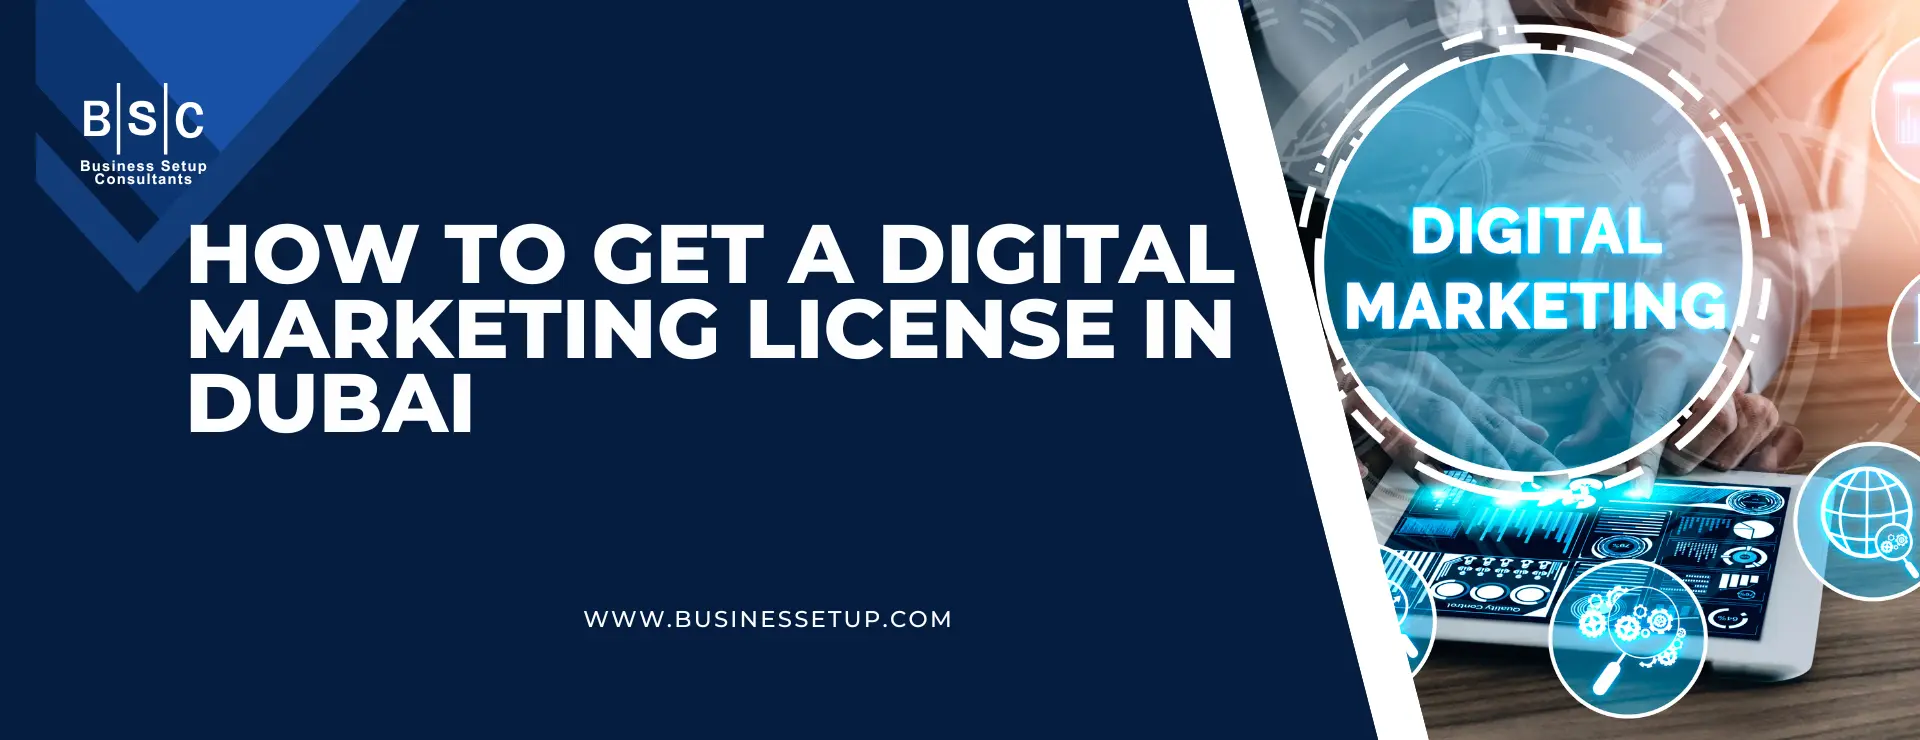 Digital Marketing License